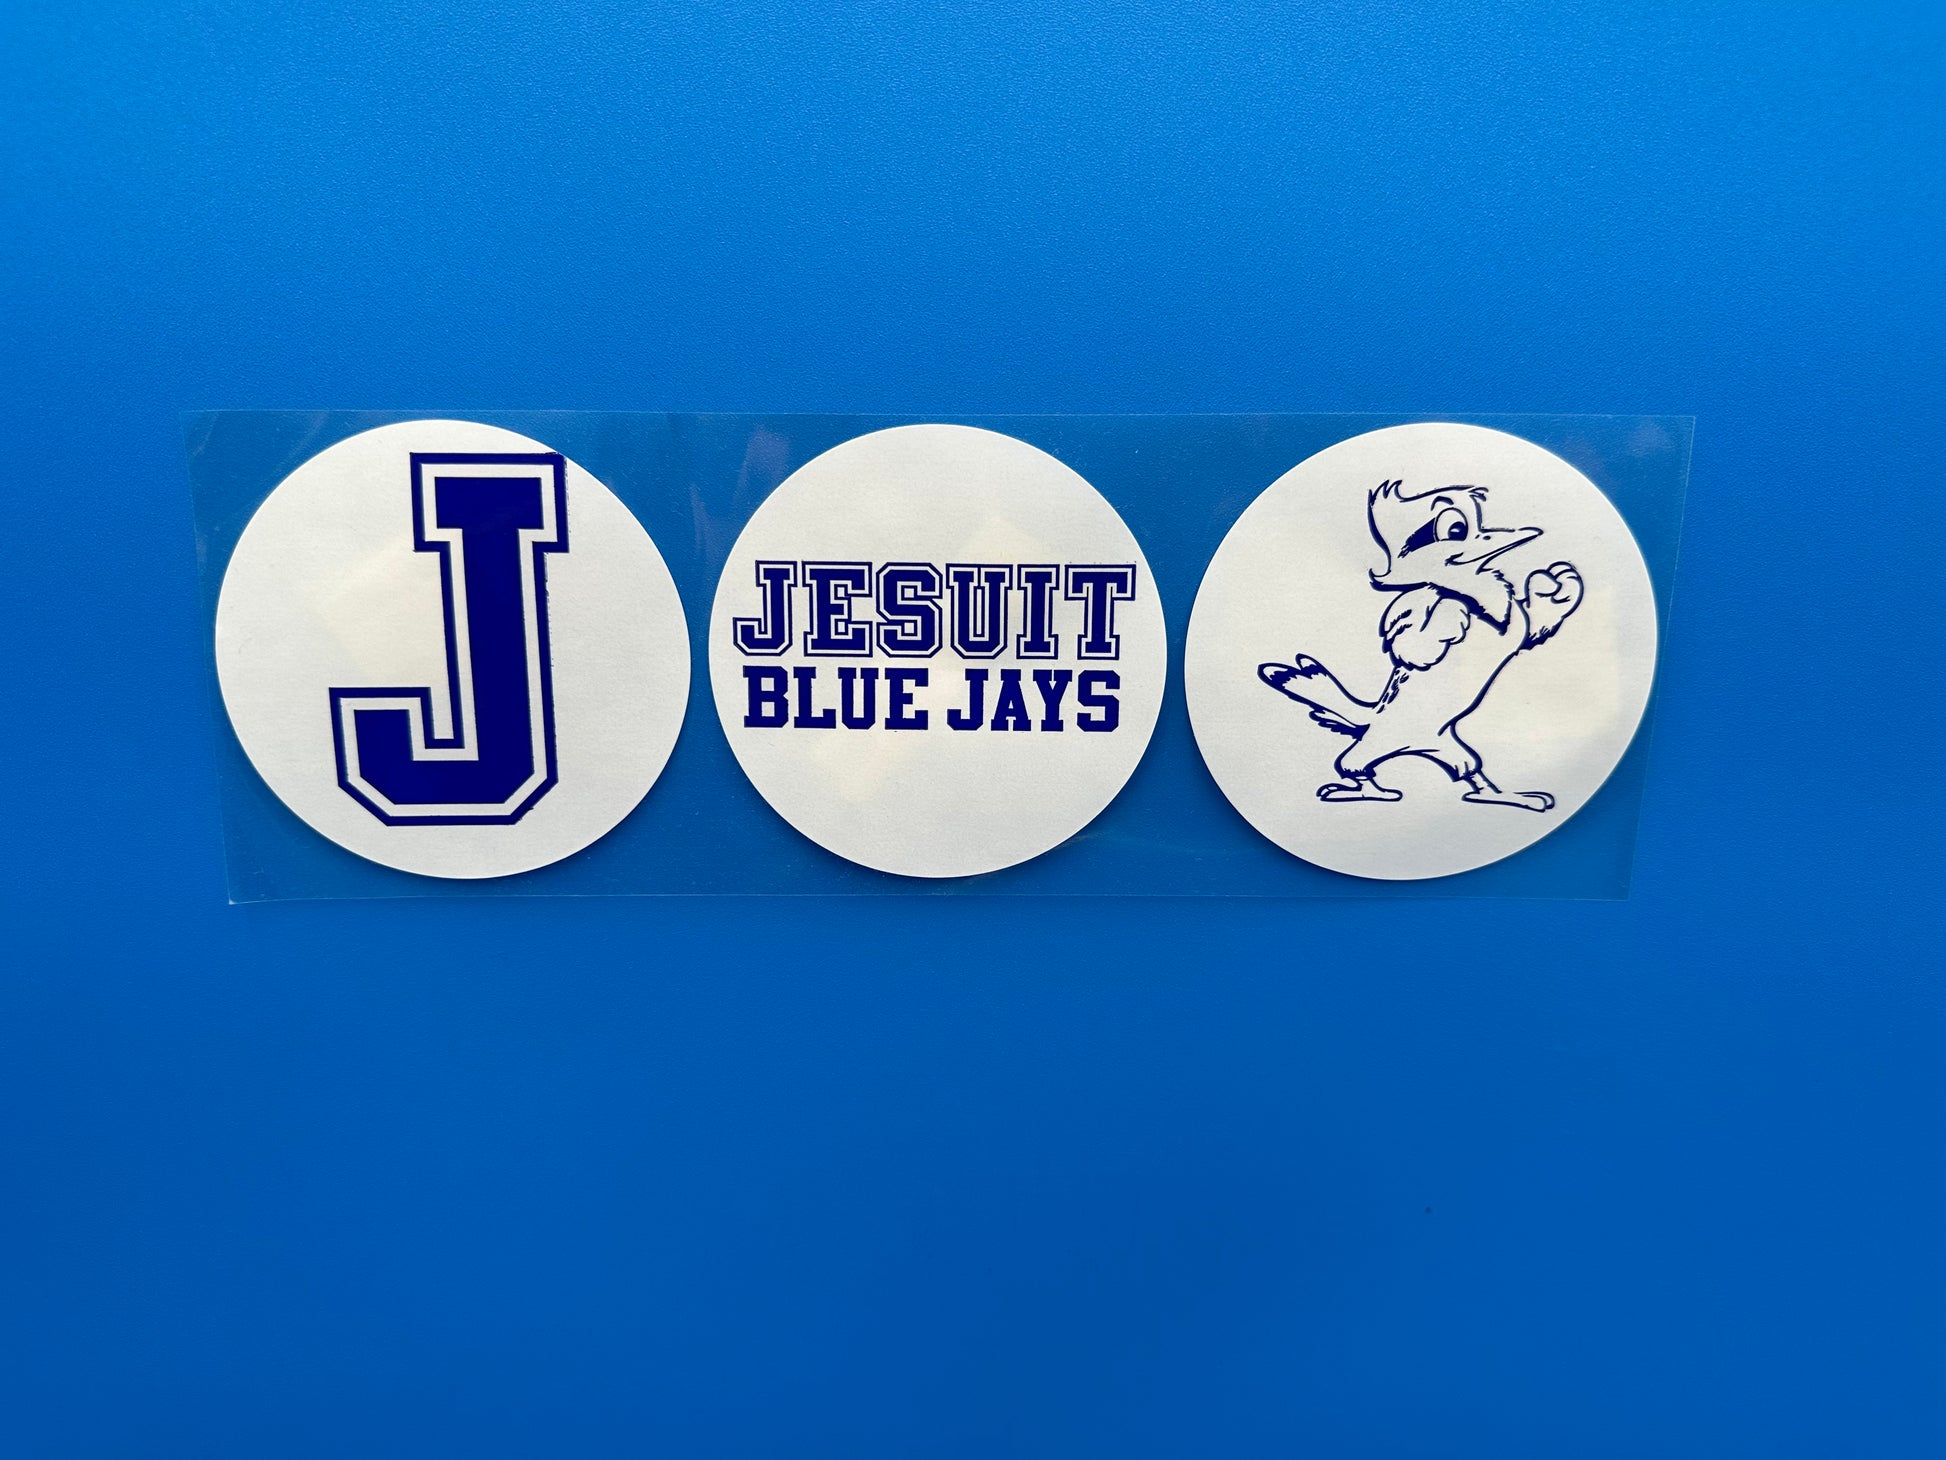 Show your Blue Jay Spirit!  Set of 3 stickers - J, Jayson & Jesuit Blue Jays.   Each round sticker measures 3 inches.